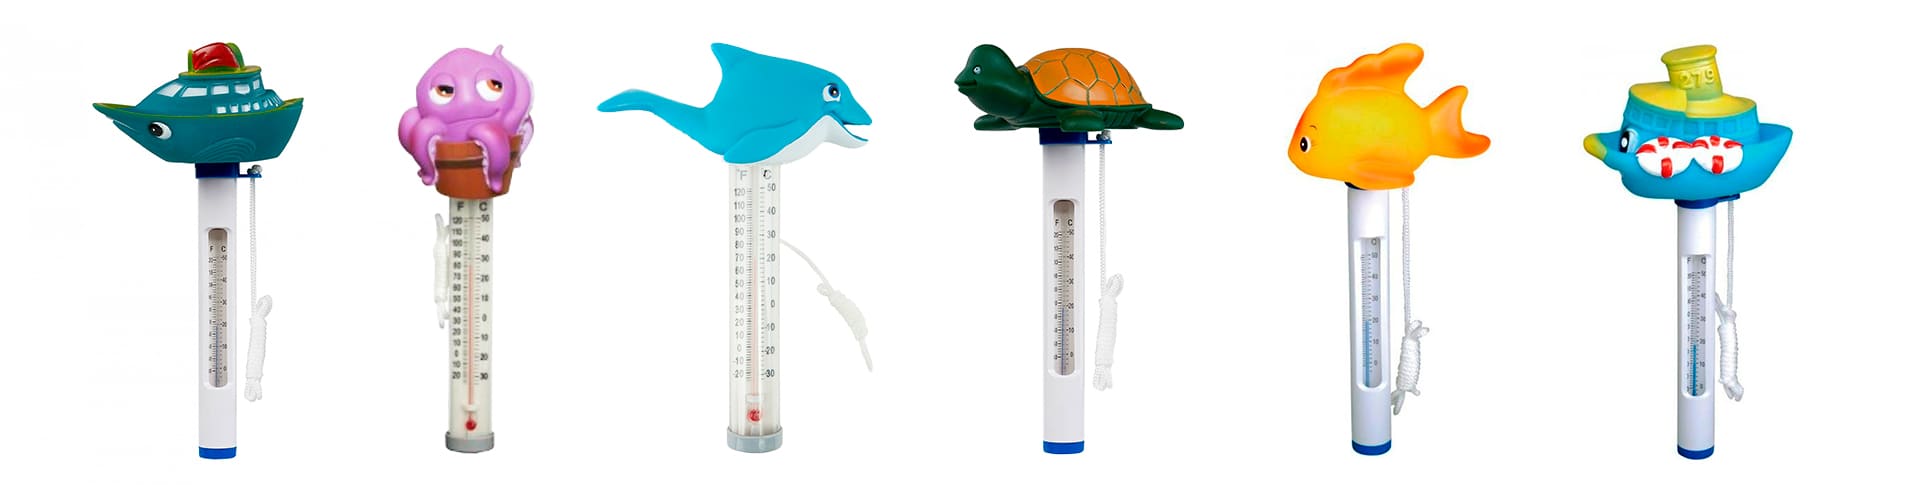 Плавающие термометры-игрушки